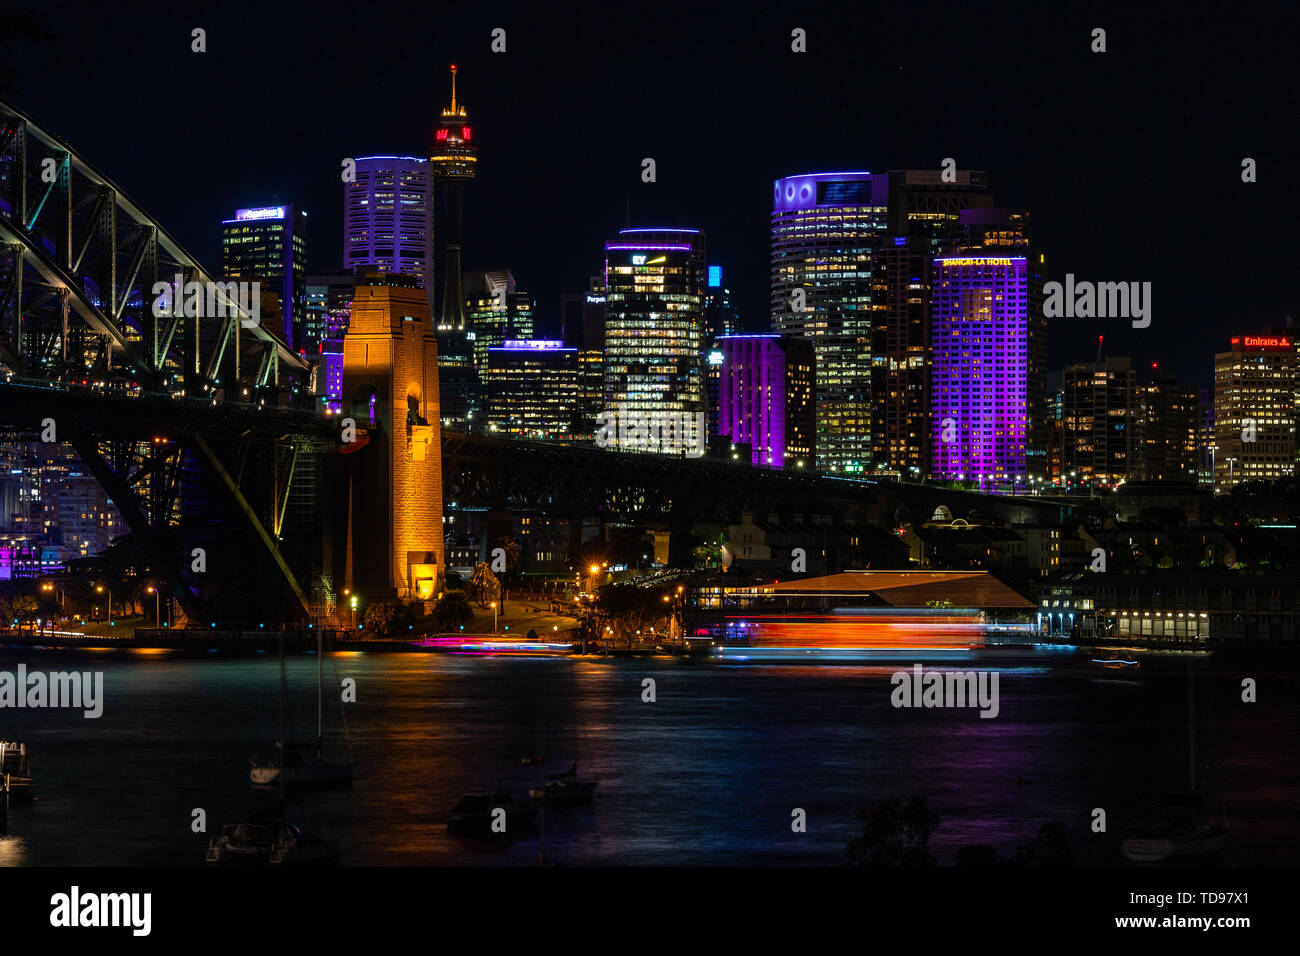 The Sydney Harbour at night during the popular light festival Vivid. Sydney, Australia. Stock Photo